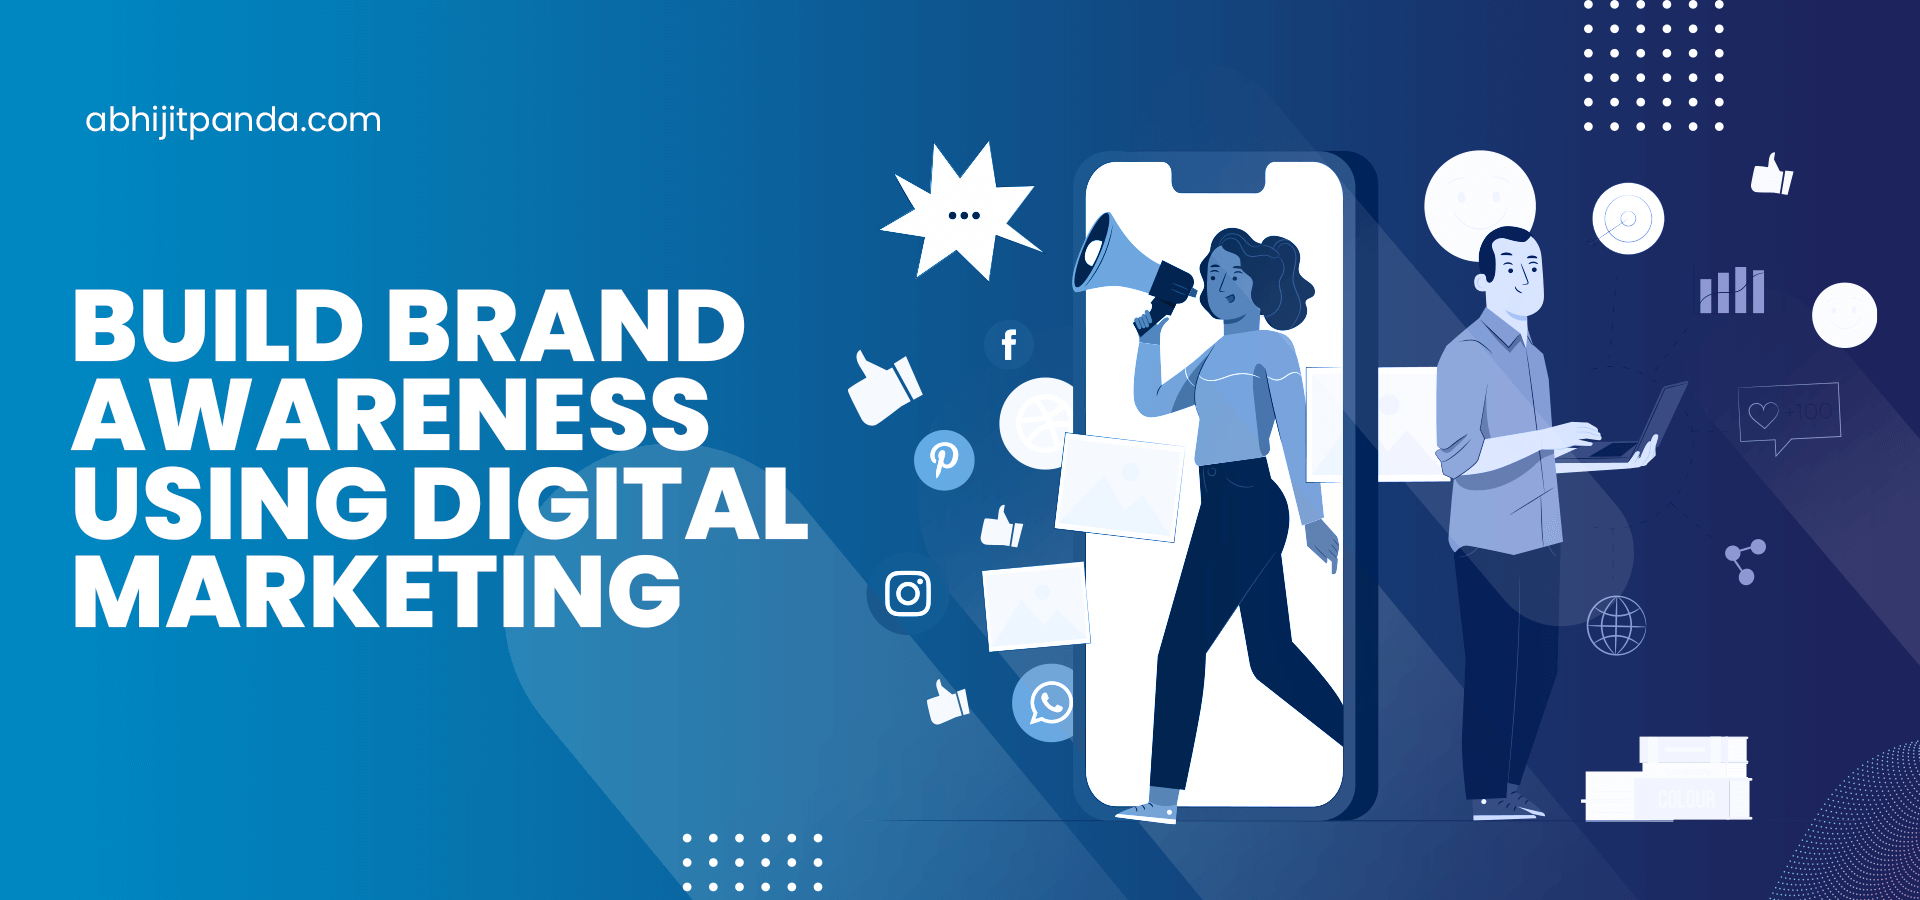 Build Brand Awareness using Digital Marketing